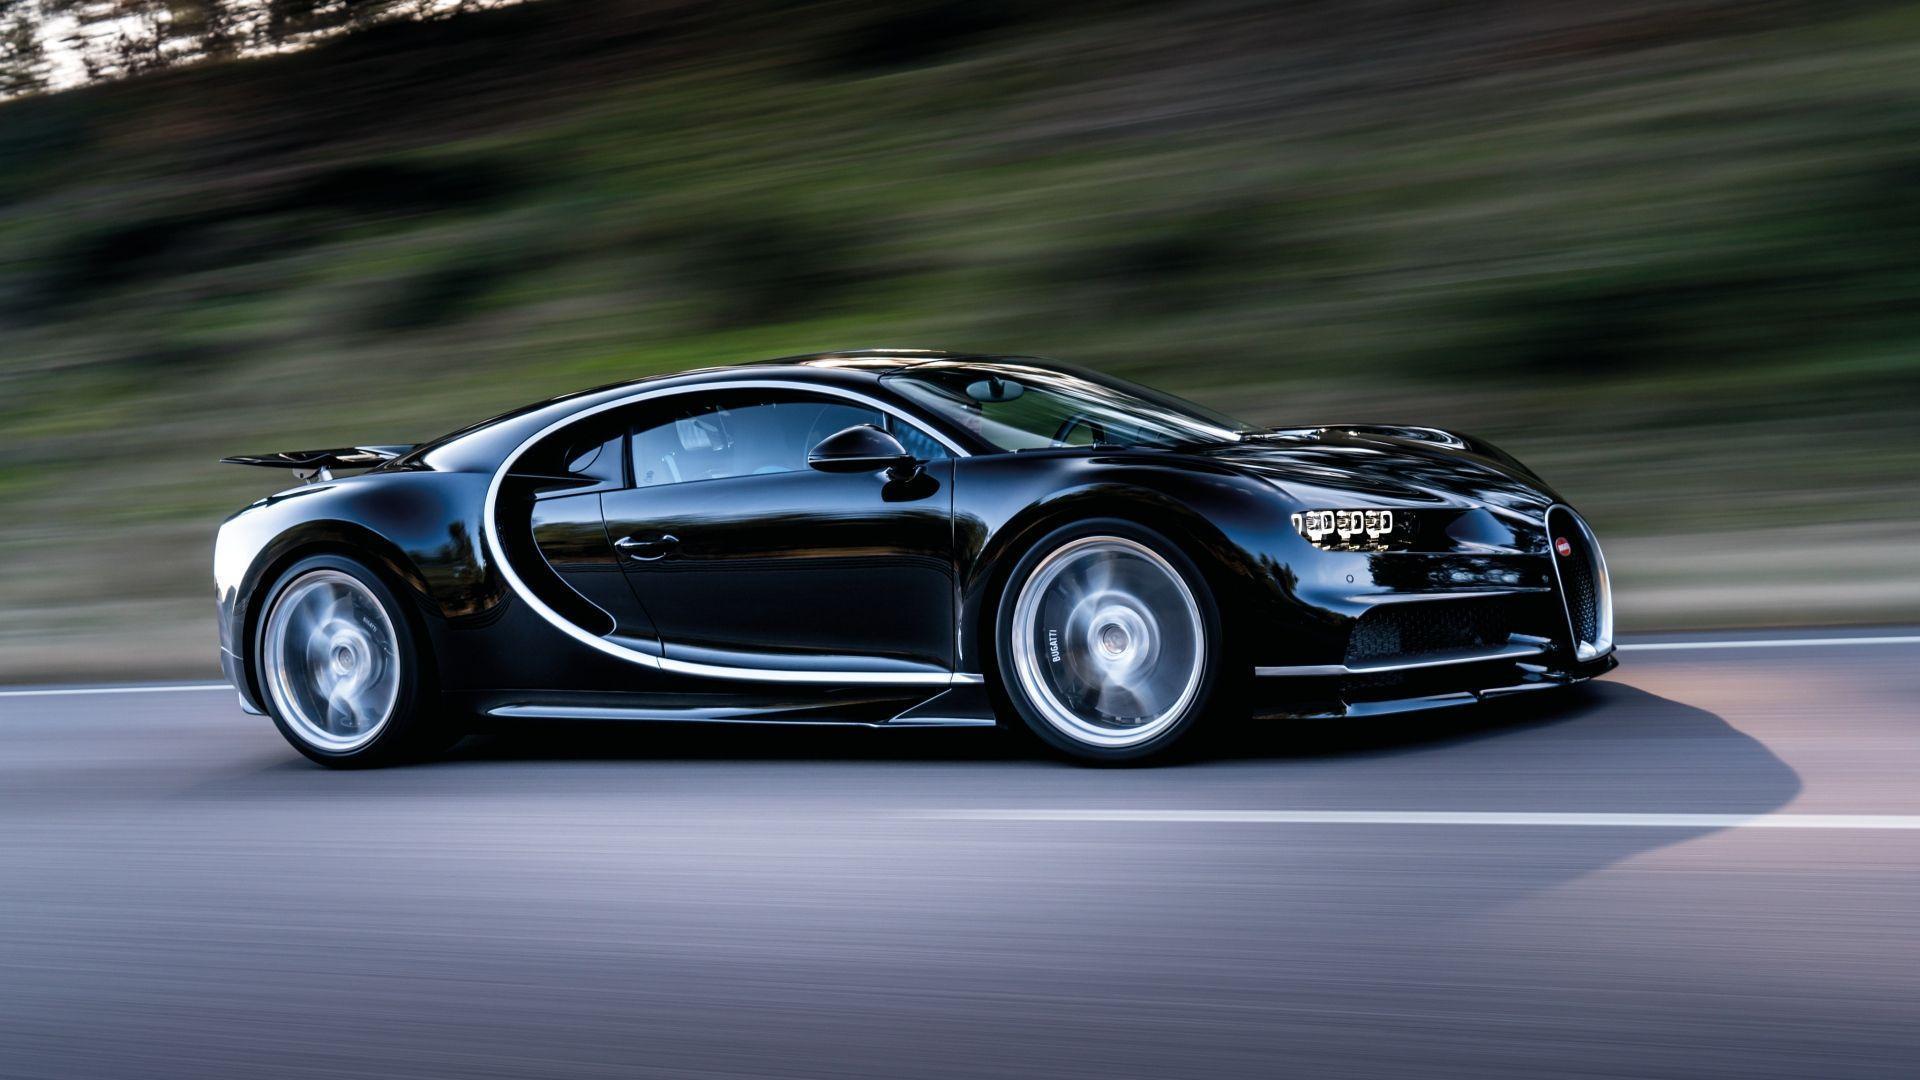 Bugatti Chiron Wallpapers  Top 30 Best Bugatti Chiron Backgrounds Download